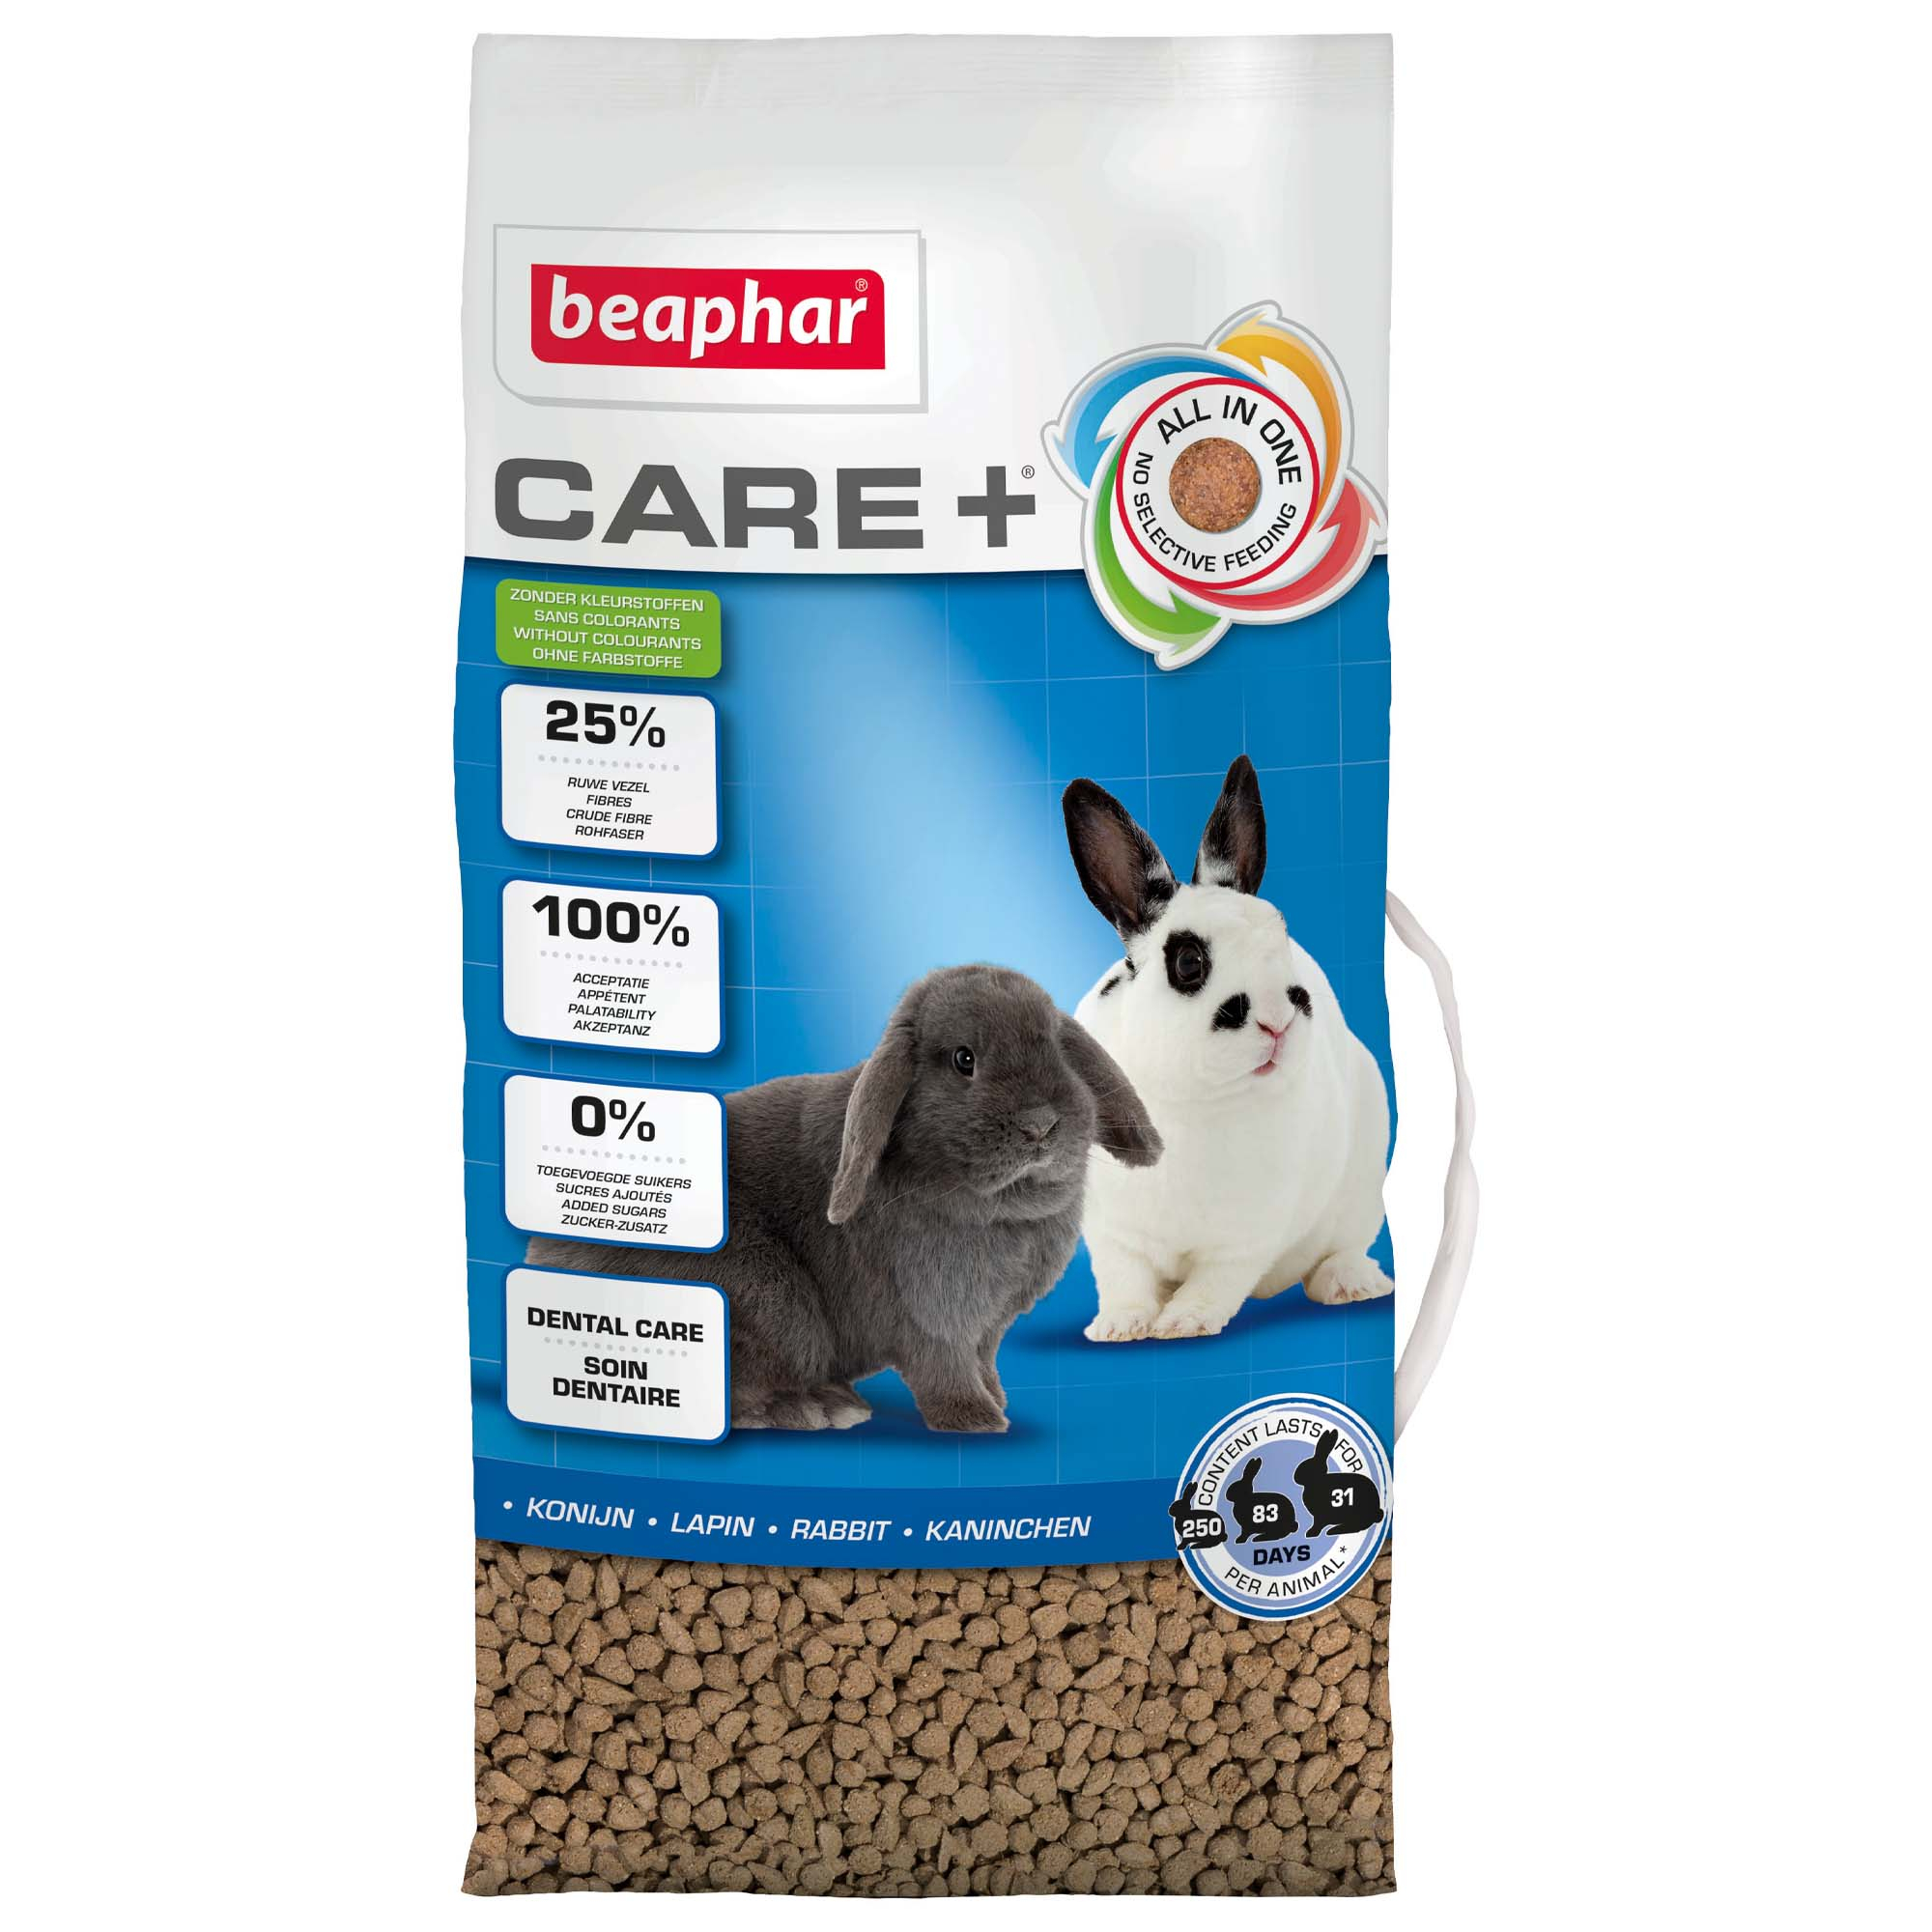 Beaphar Care+ pienso para conejos